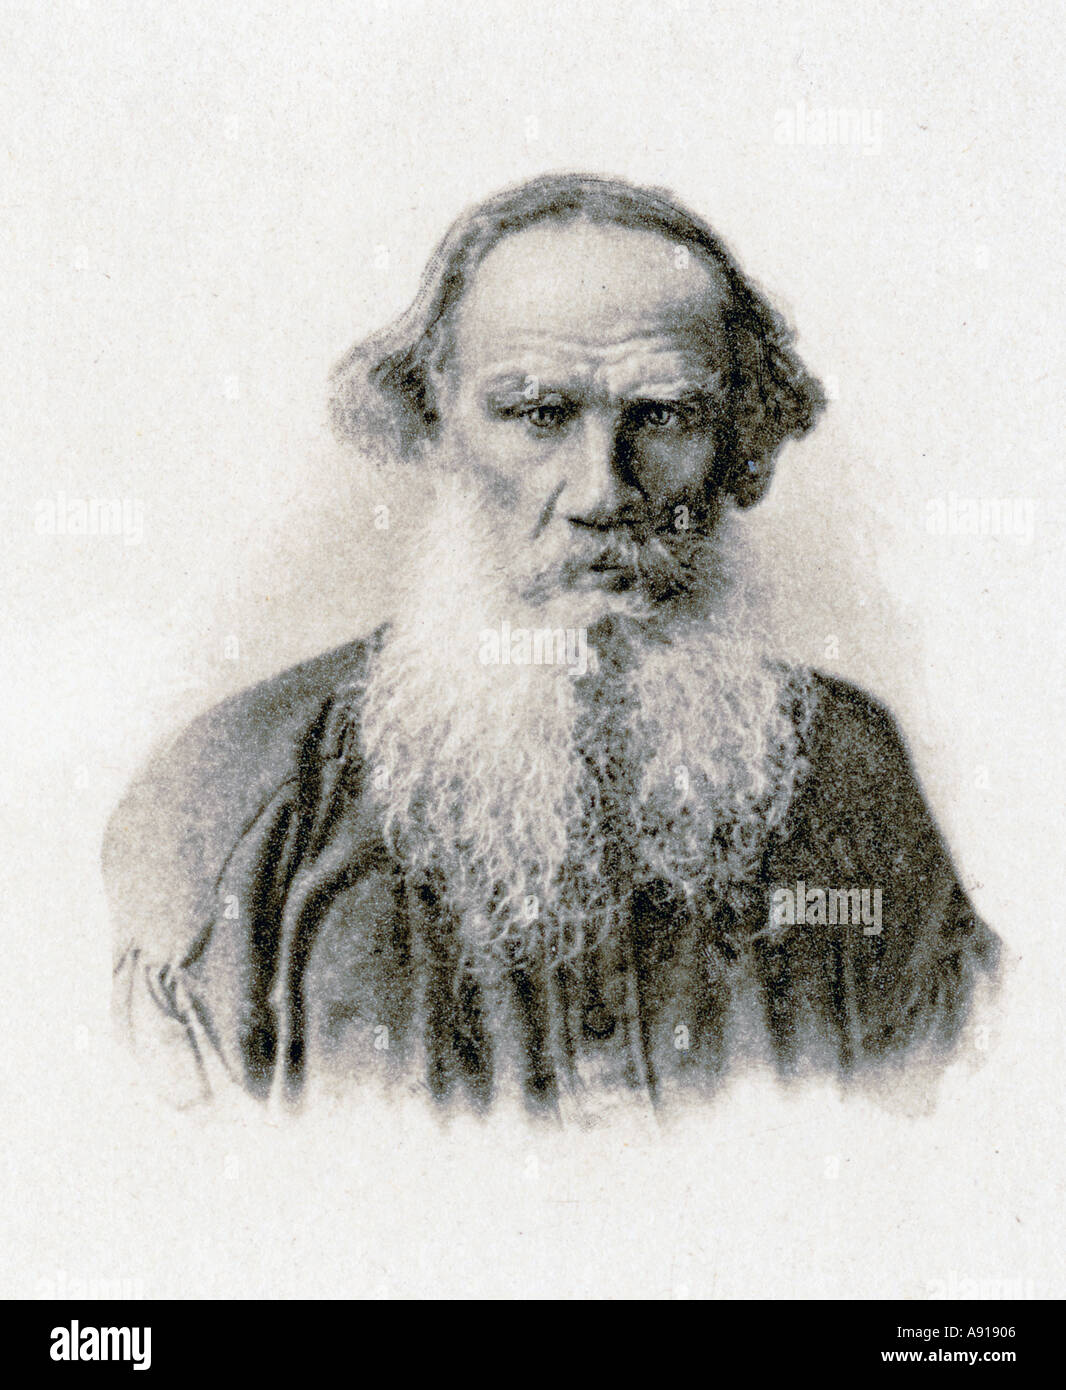 Leo Nikolaevich Tolstoy, 1828 - 1910. Russian novelist. Stock Photo